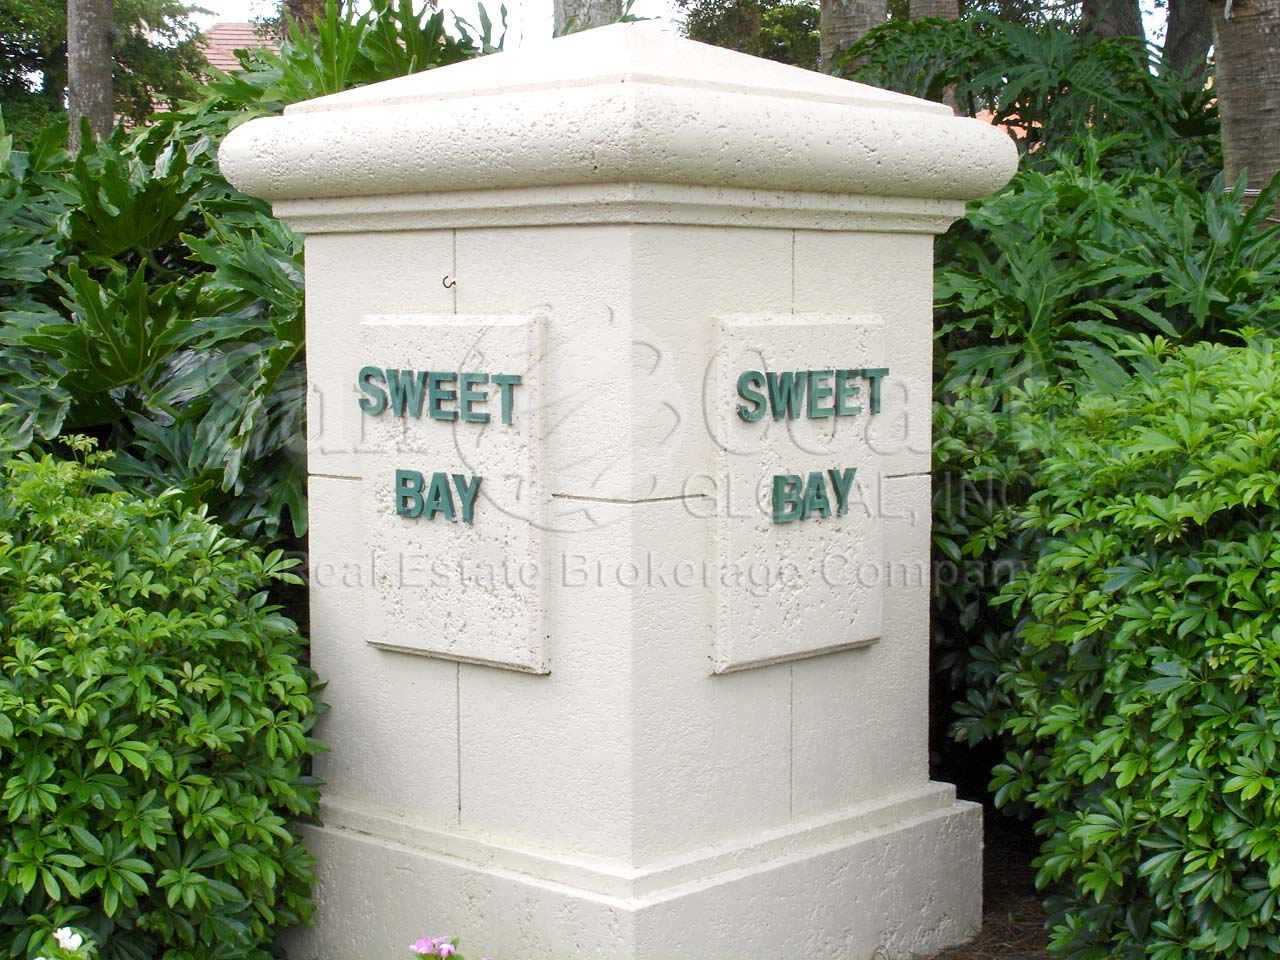 Sweet Bay sign